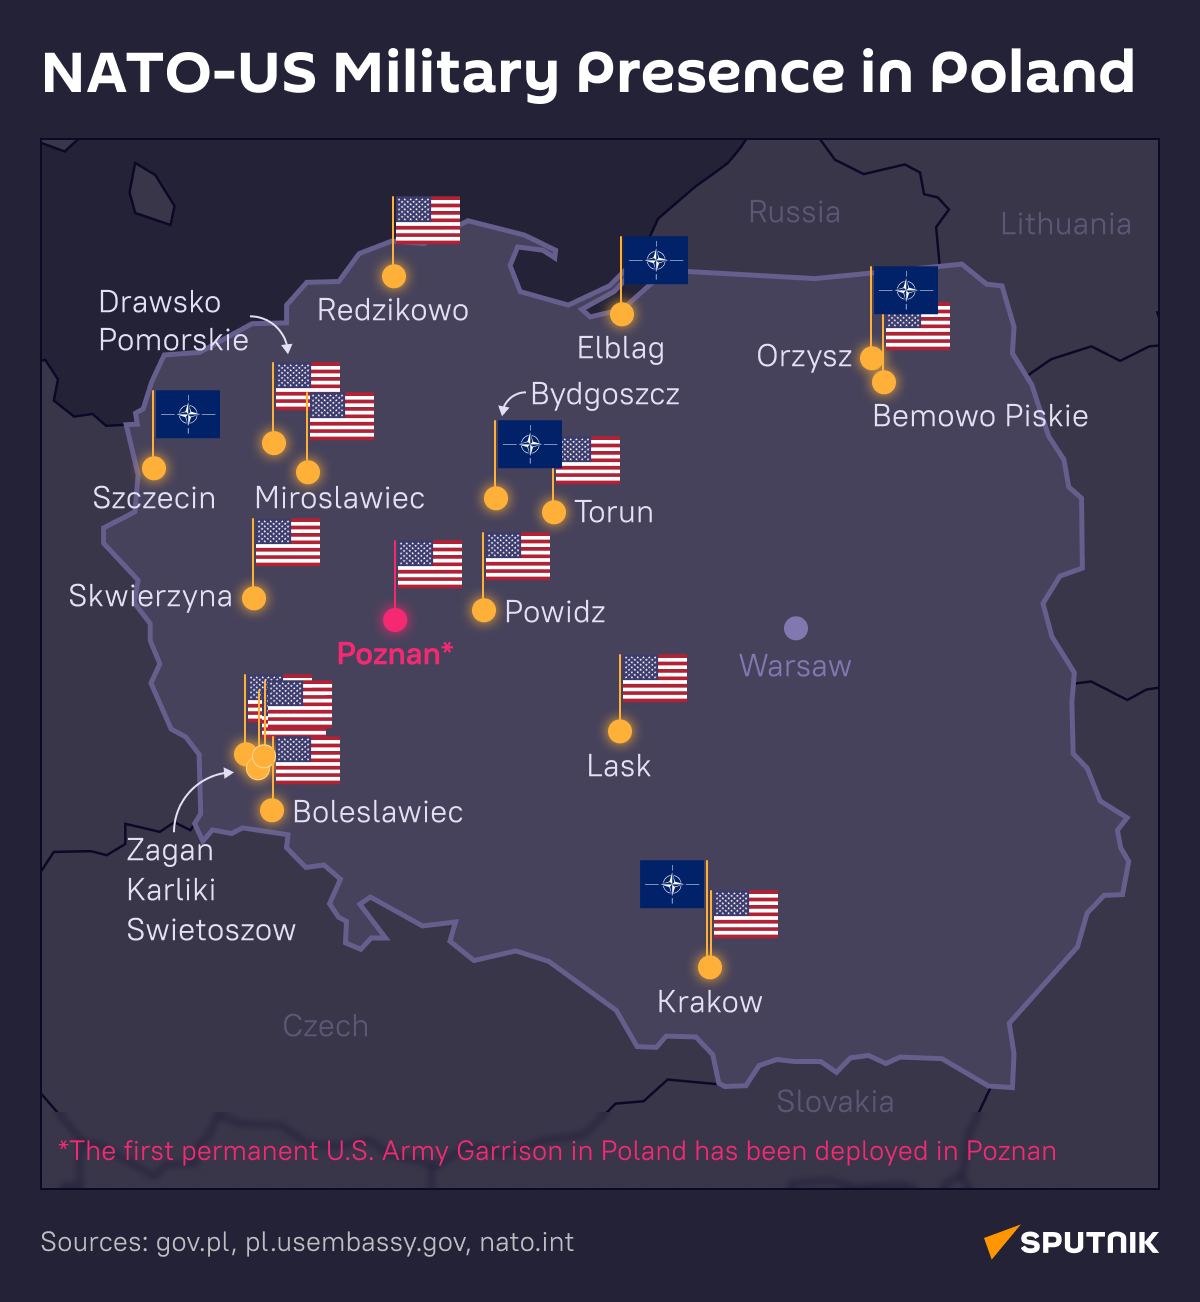 US and NATO presence in Poland